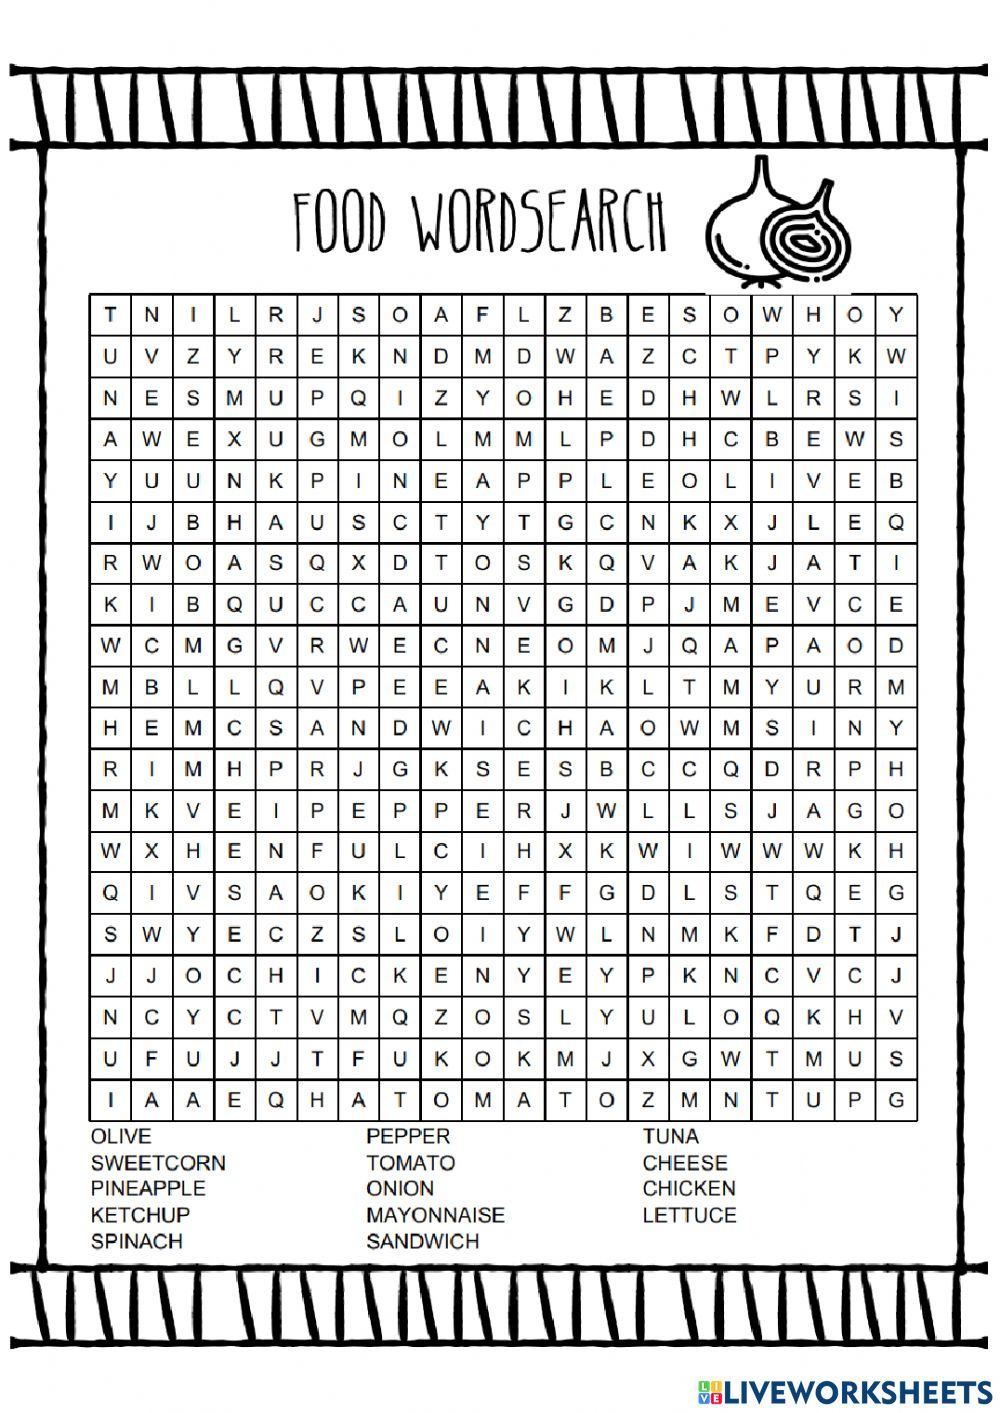 Food Wordsearch